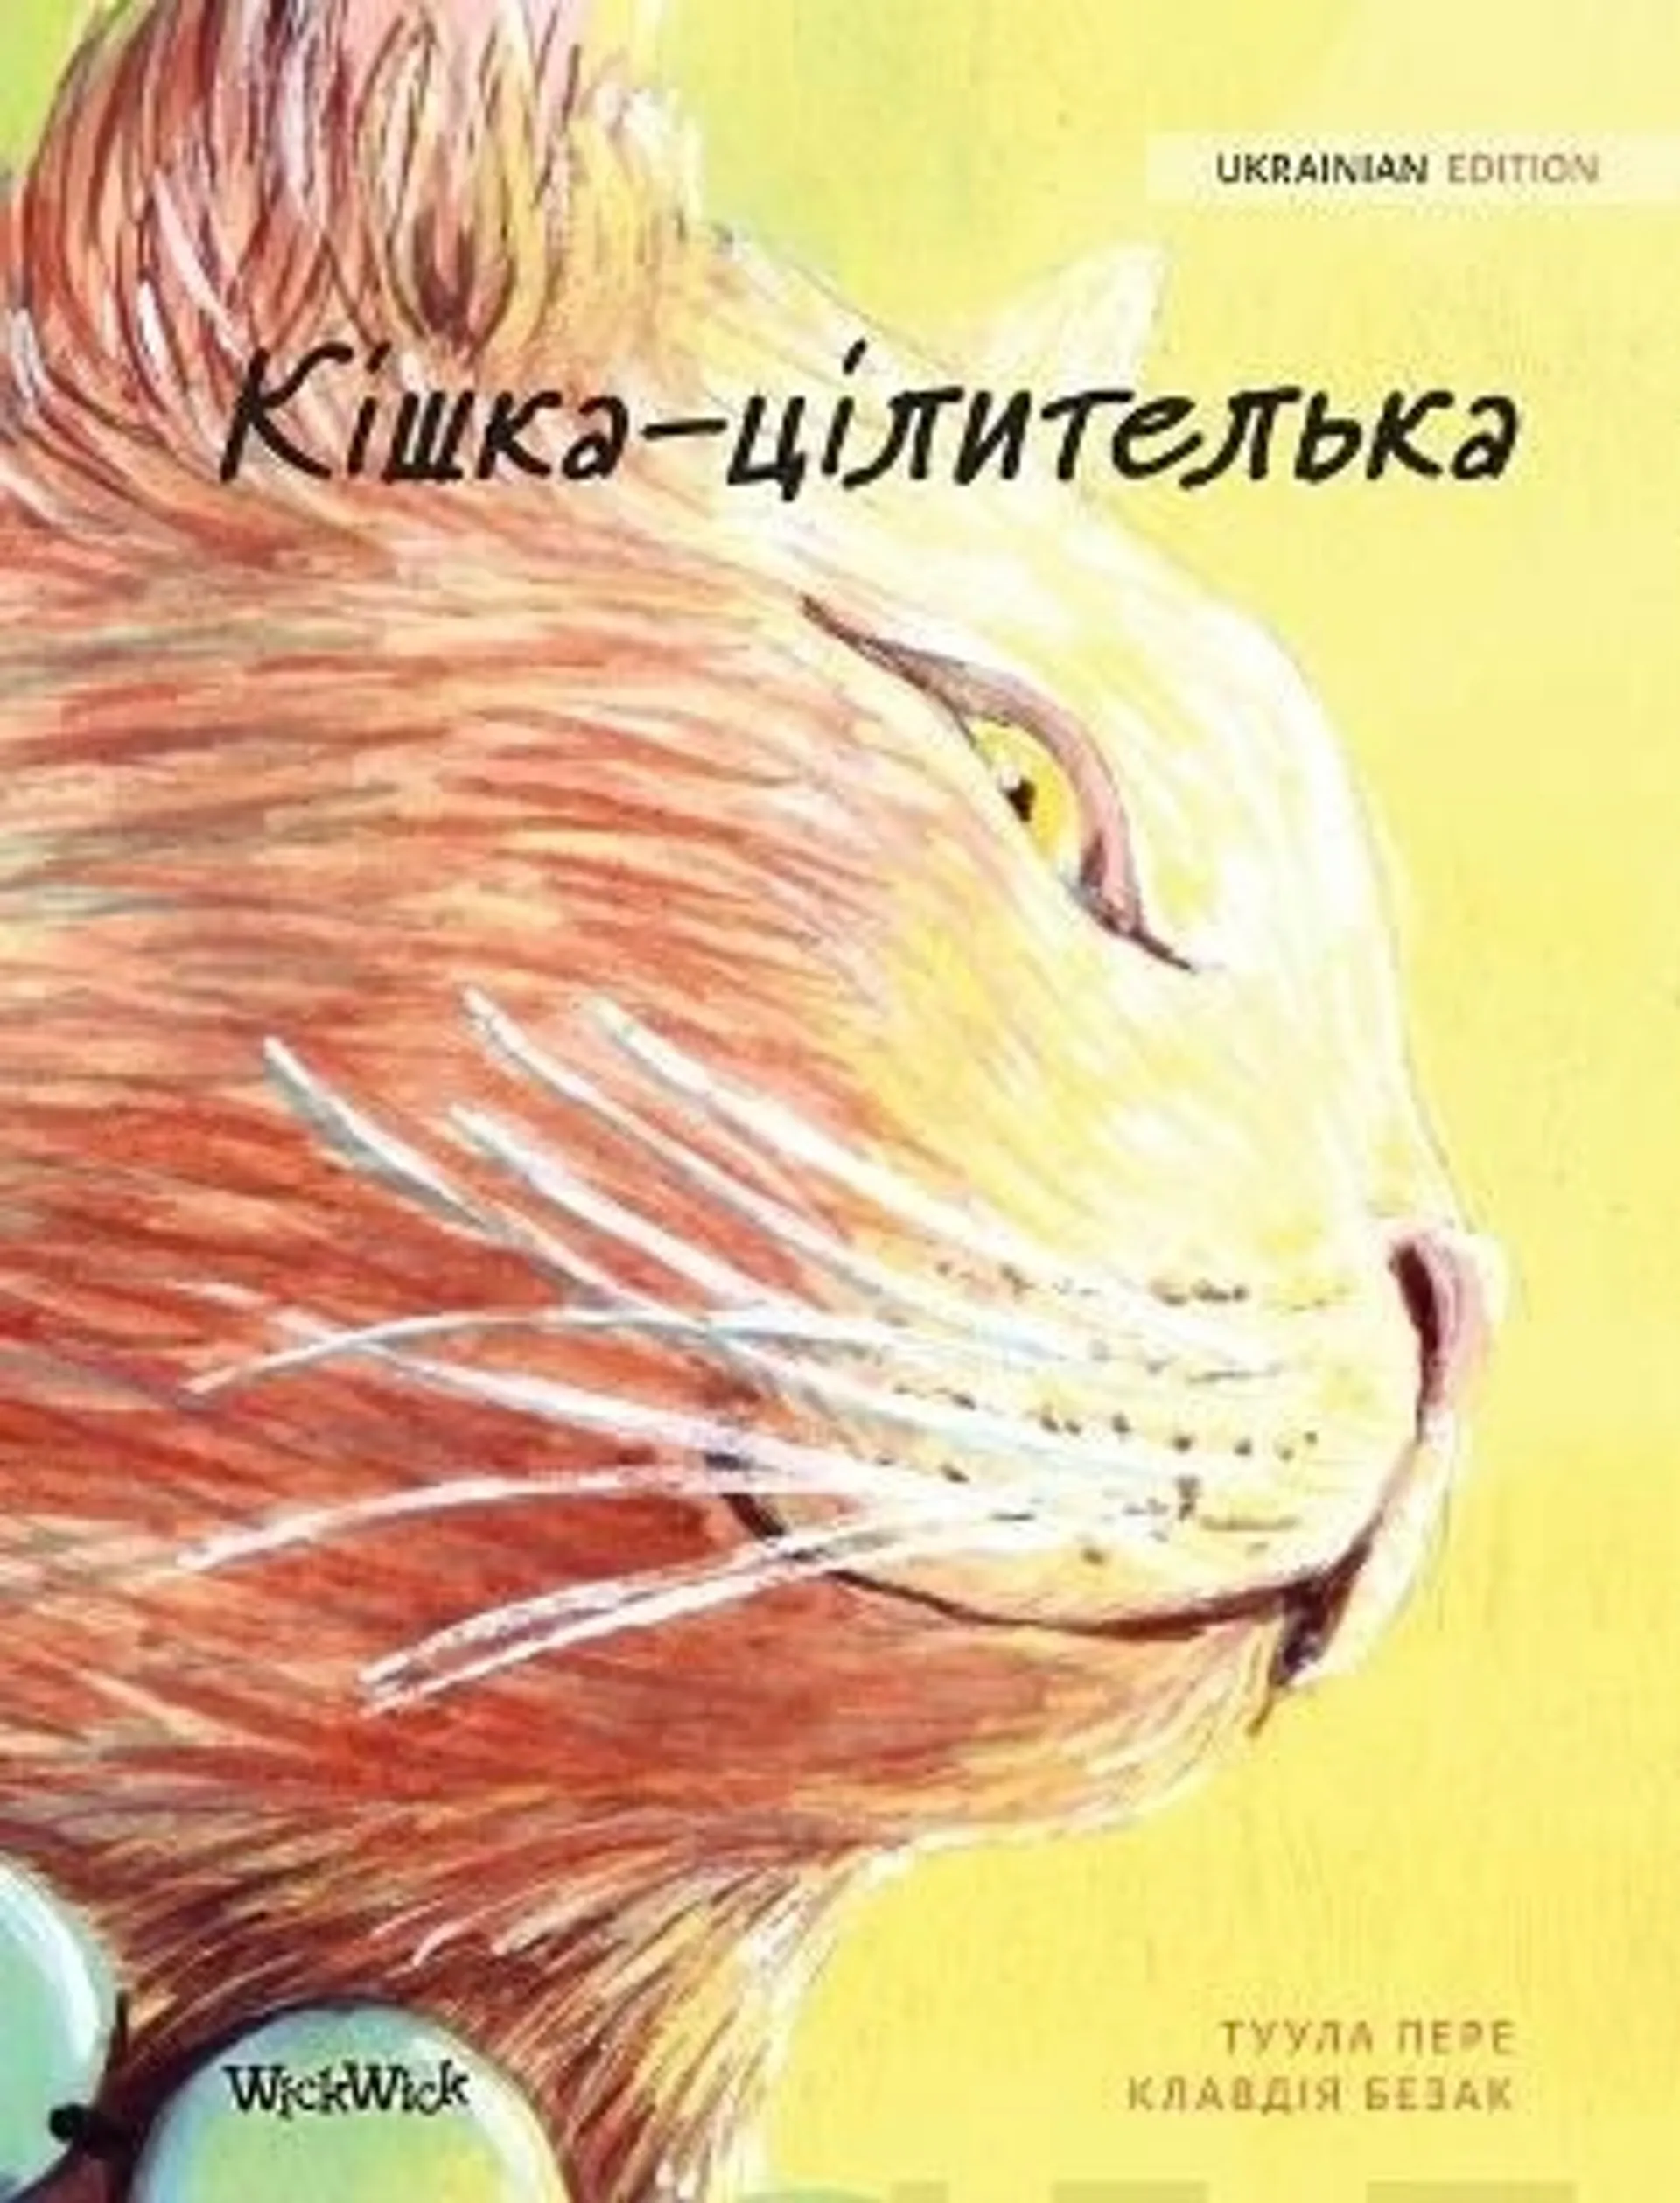 Pere, Ukrainian Edition of The Healer Cat